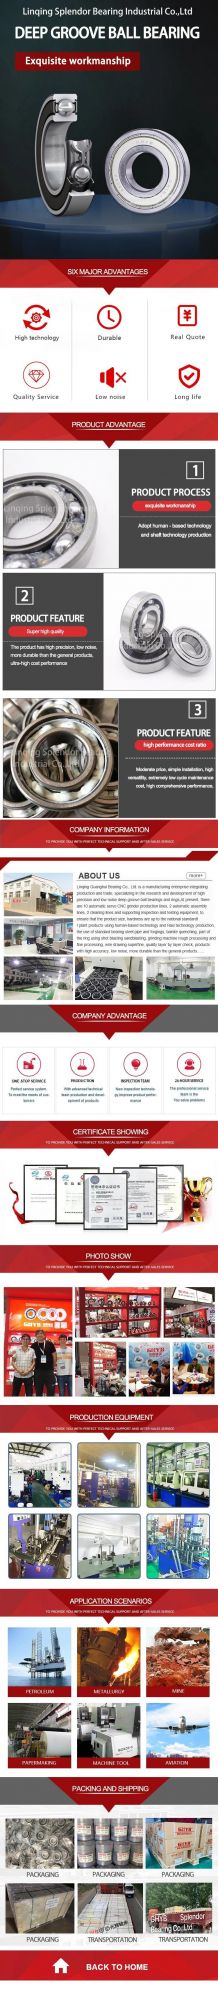 China Factory Distributor Supplier of Deep Groove Ball Bearings for Motors, Compressors, Alternators 6004-2rz/Z2V2